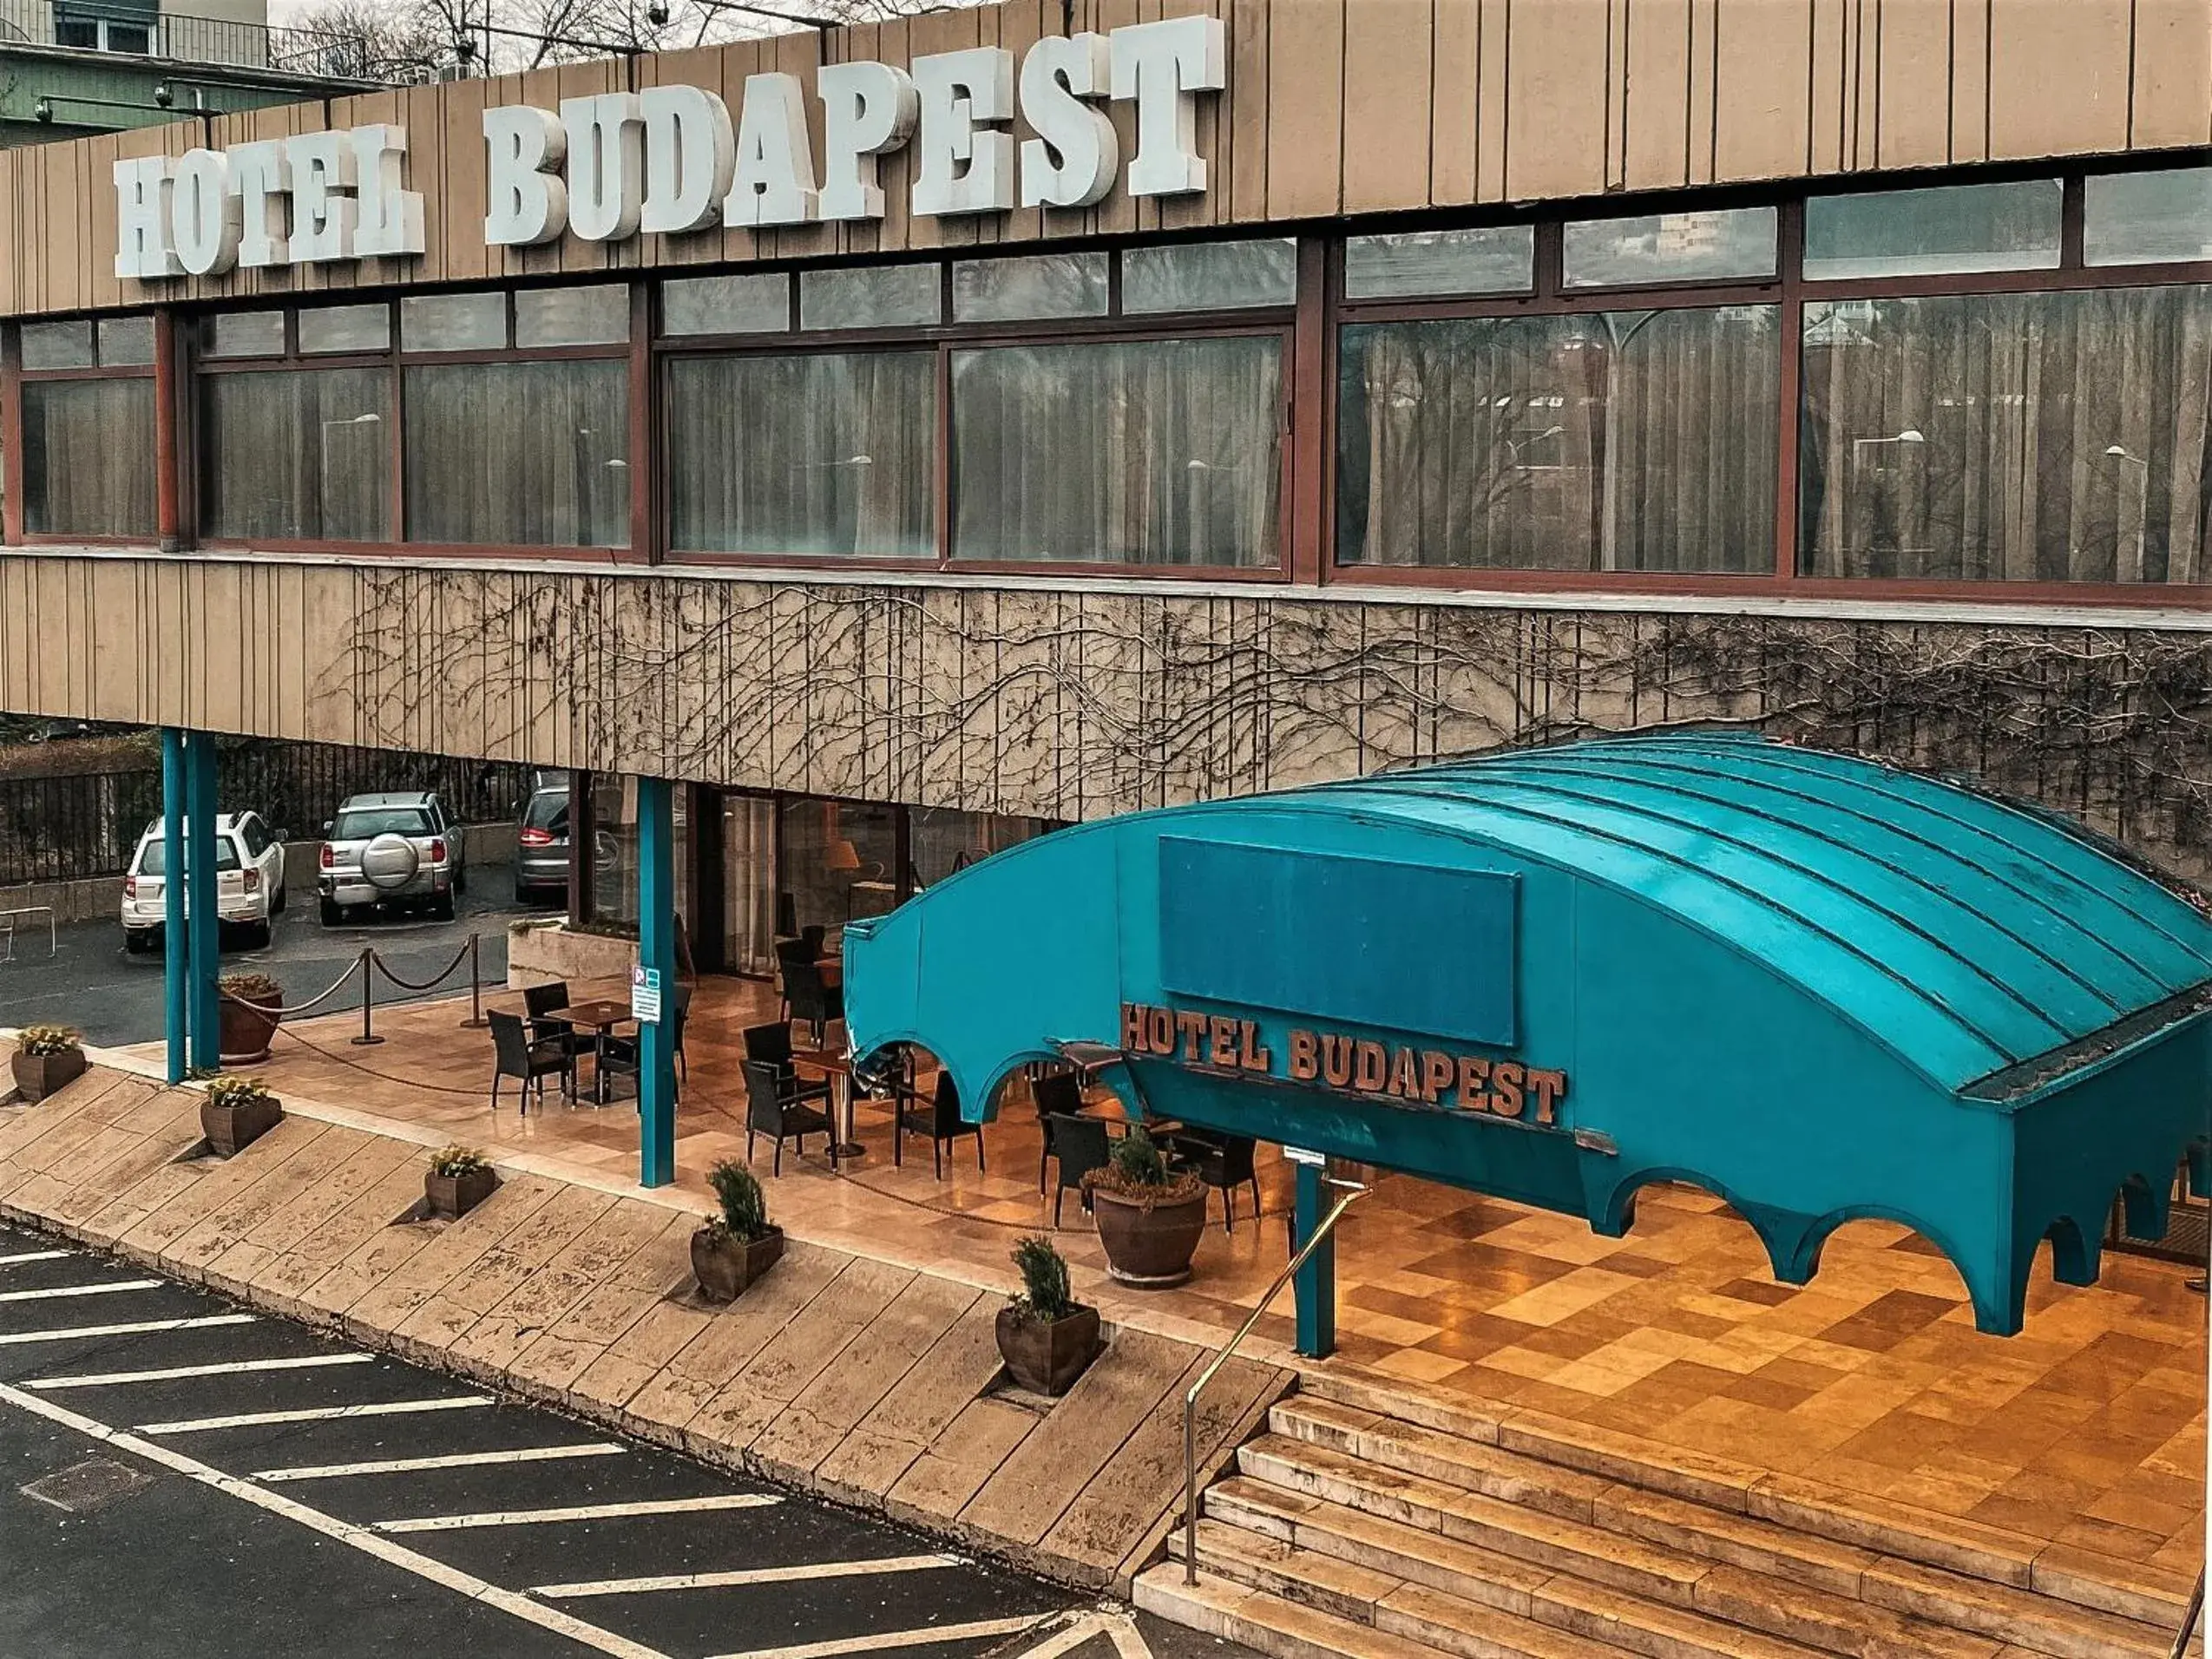 Facade/entrance in Hotel Budapest